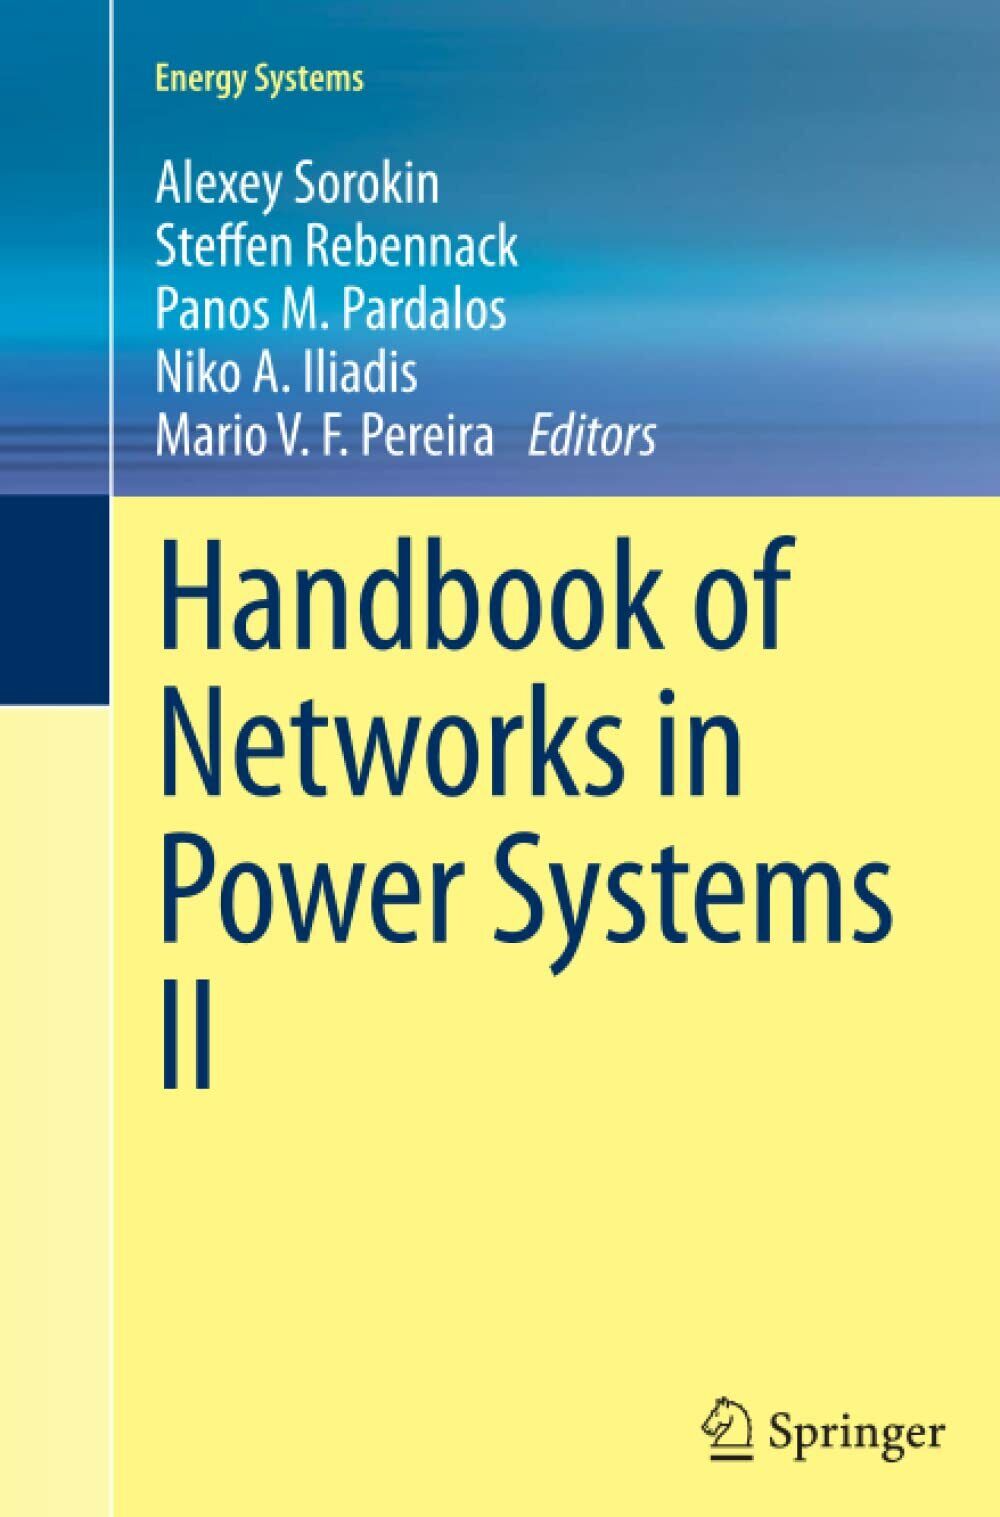 Handbook of Networks in Power Systems II - Alexey Sorokin - Springer, 2014